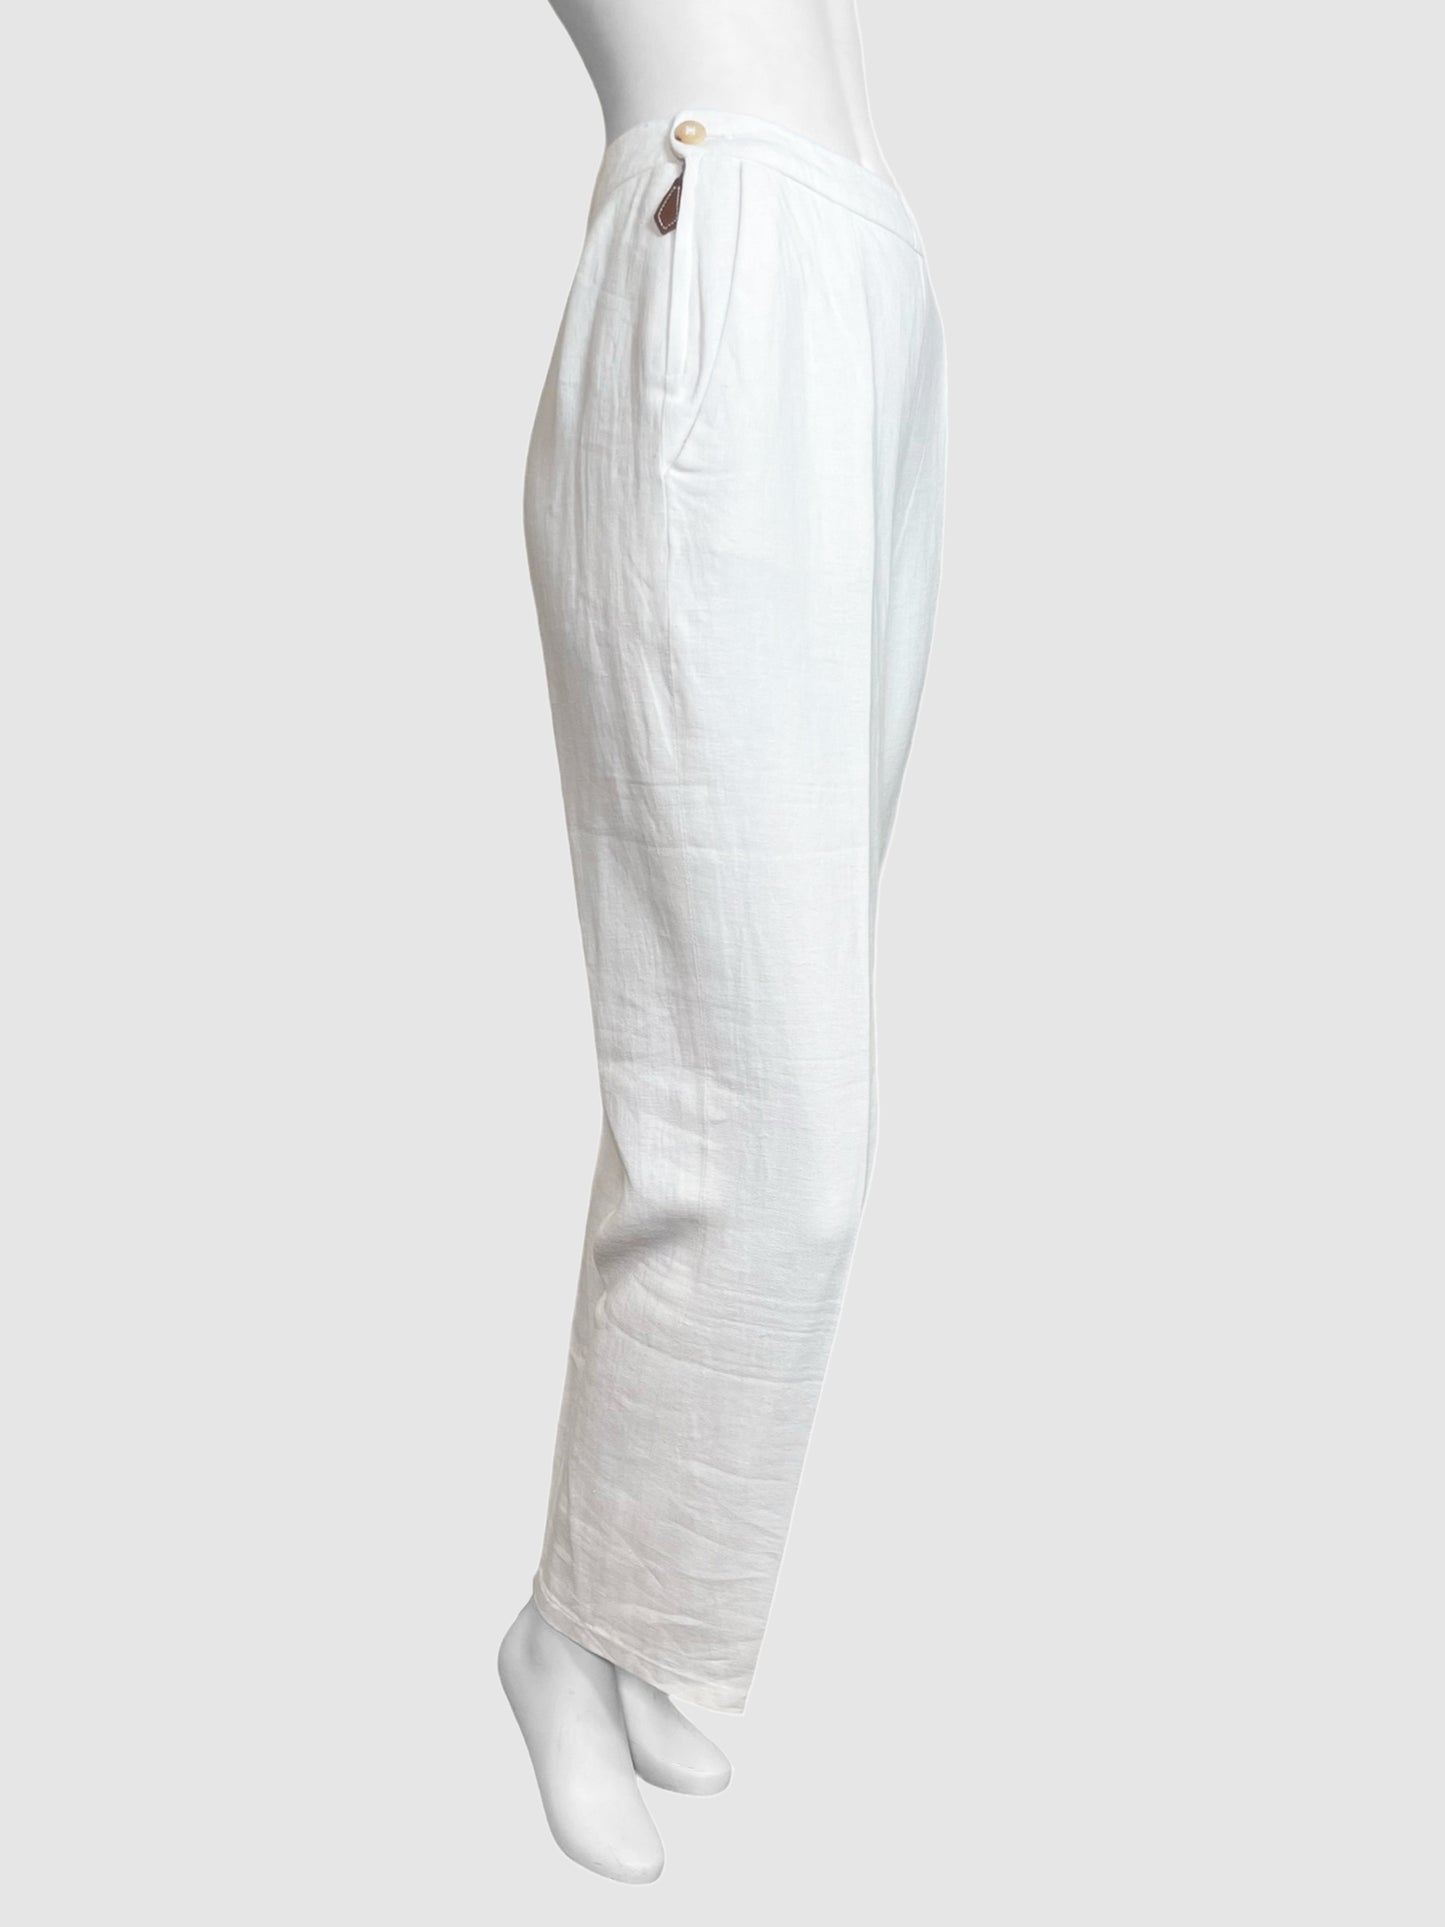 Hermès Linen Trousers - Size 40